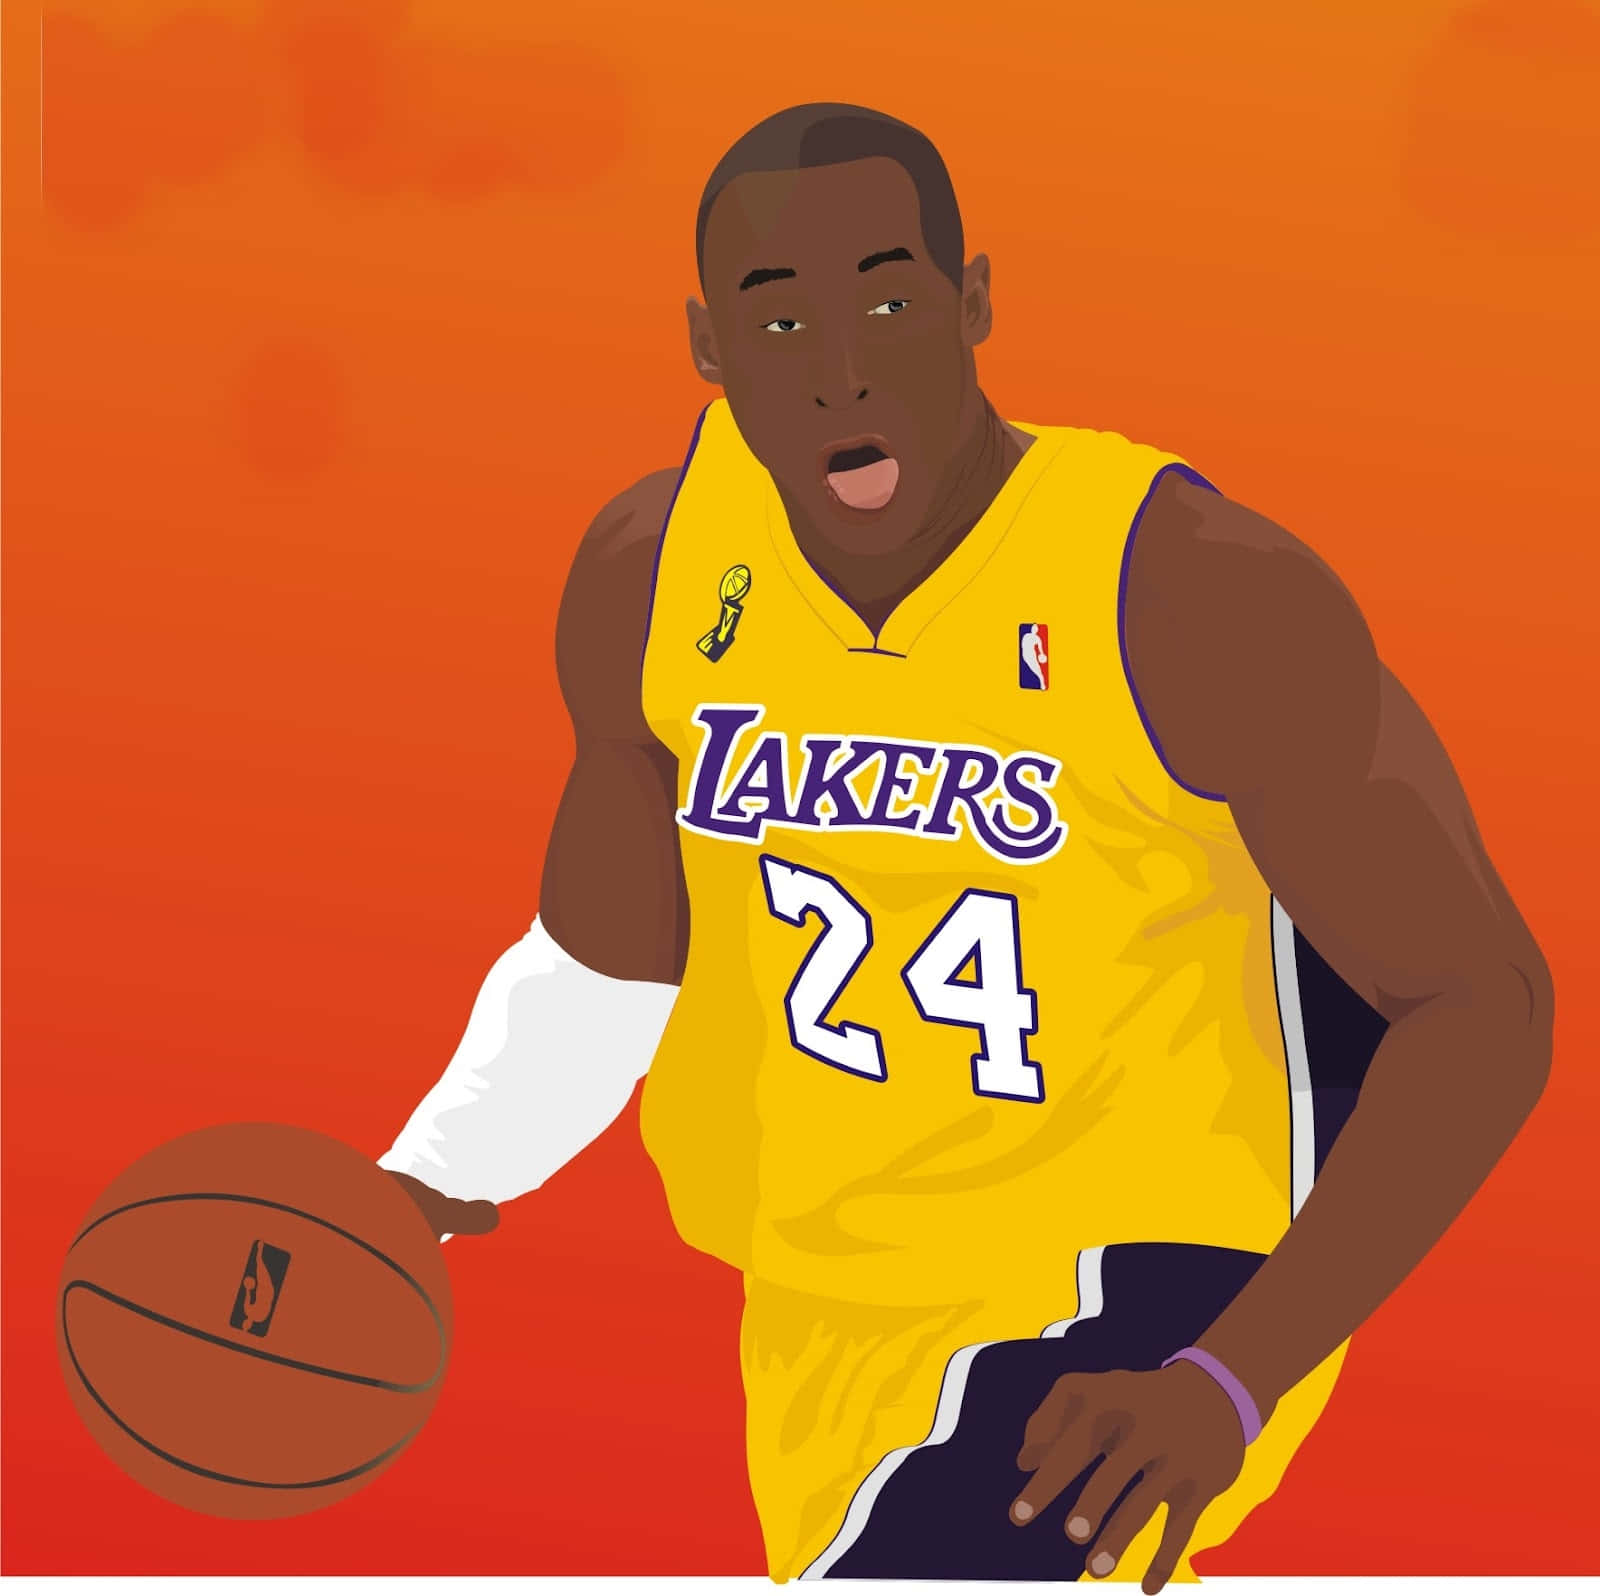 Download King Kobe Bryant Cartoon Wallpaper